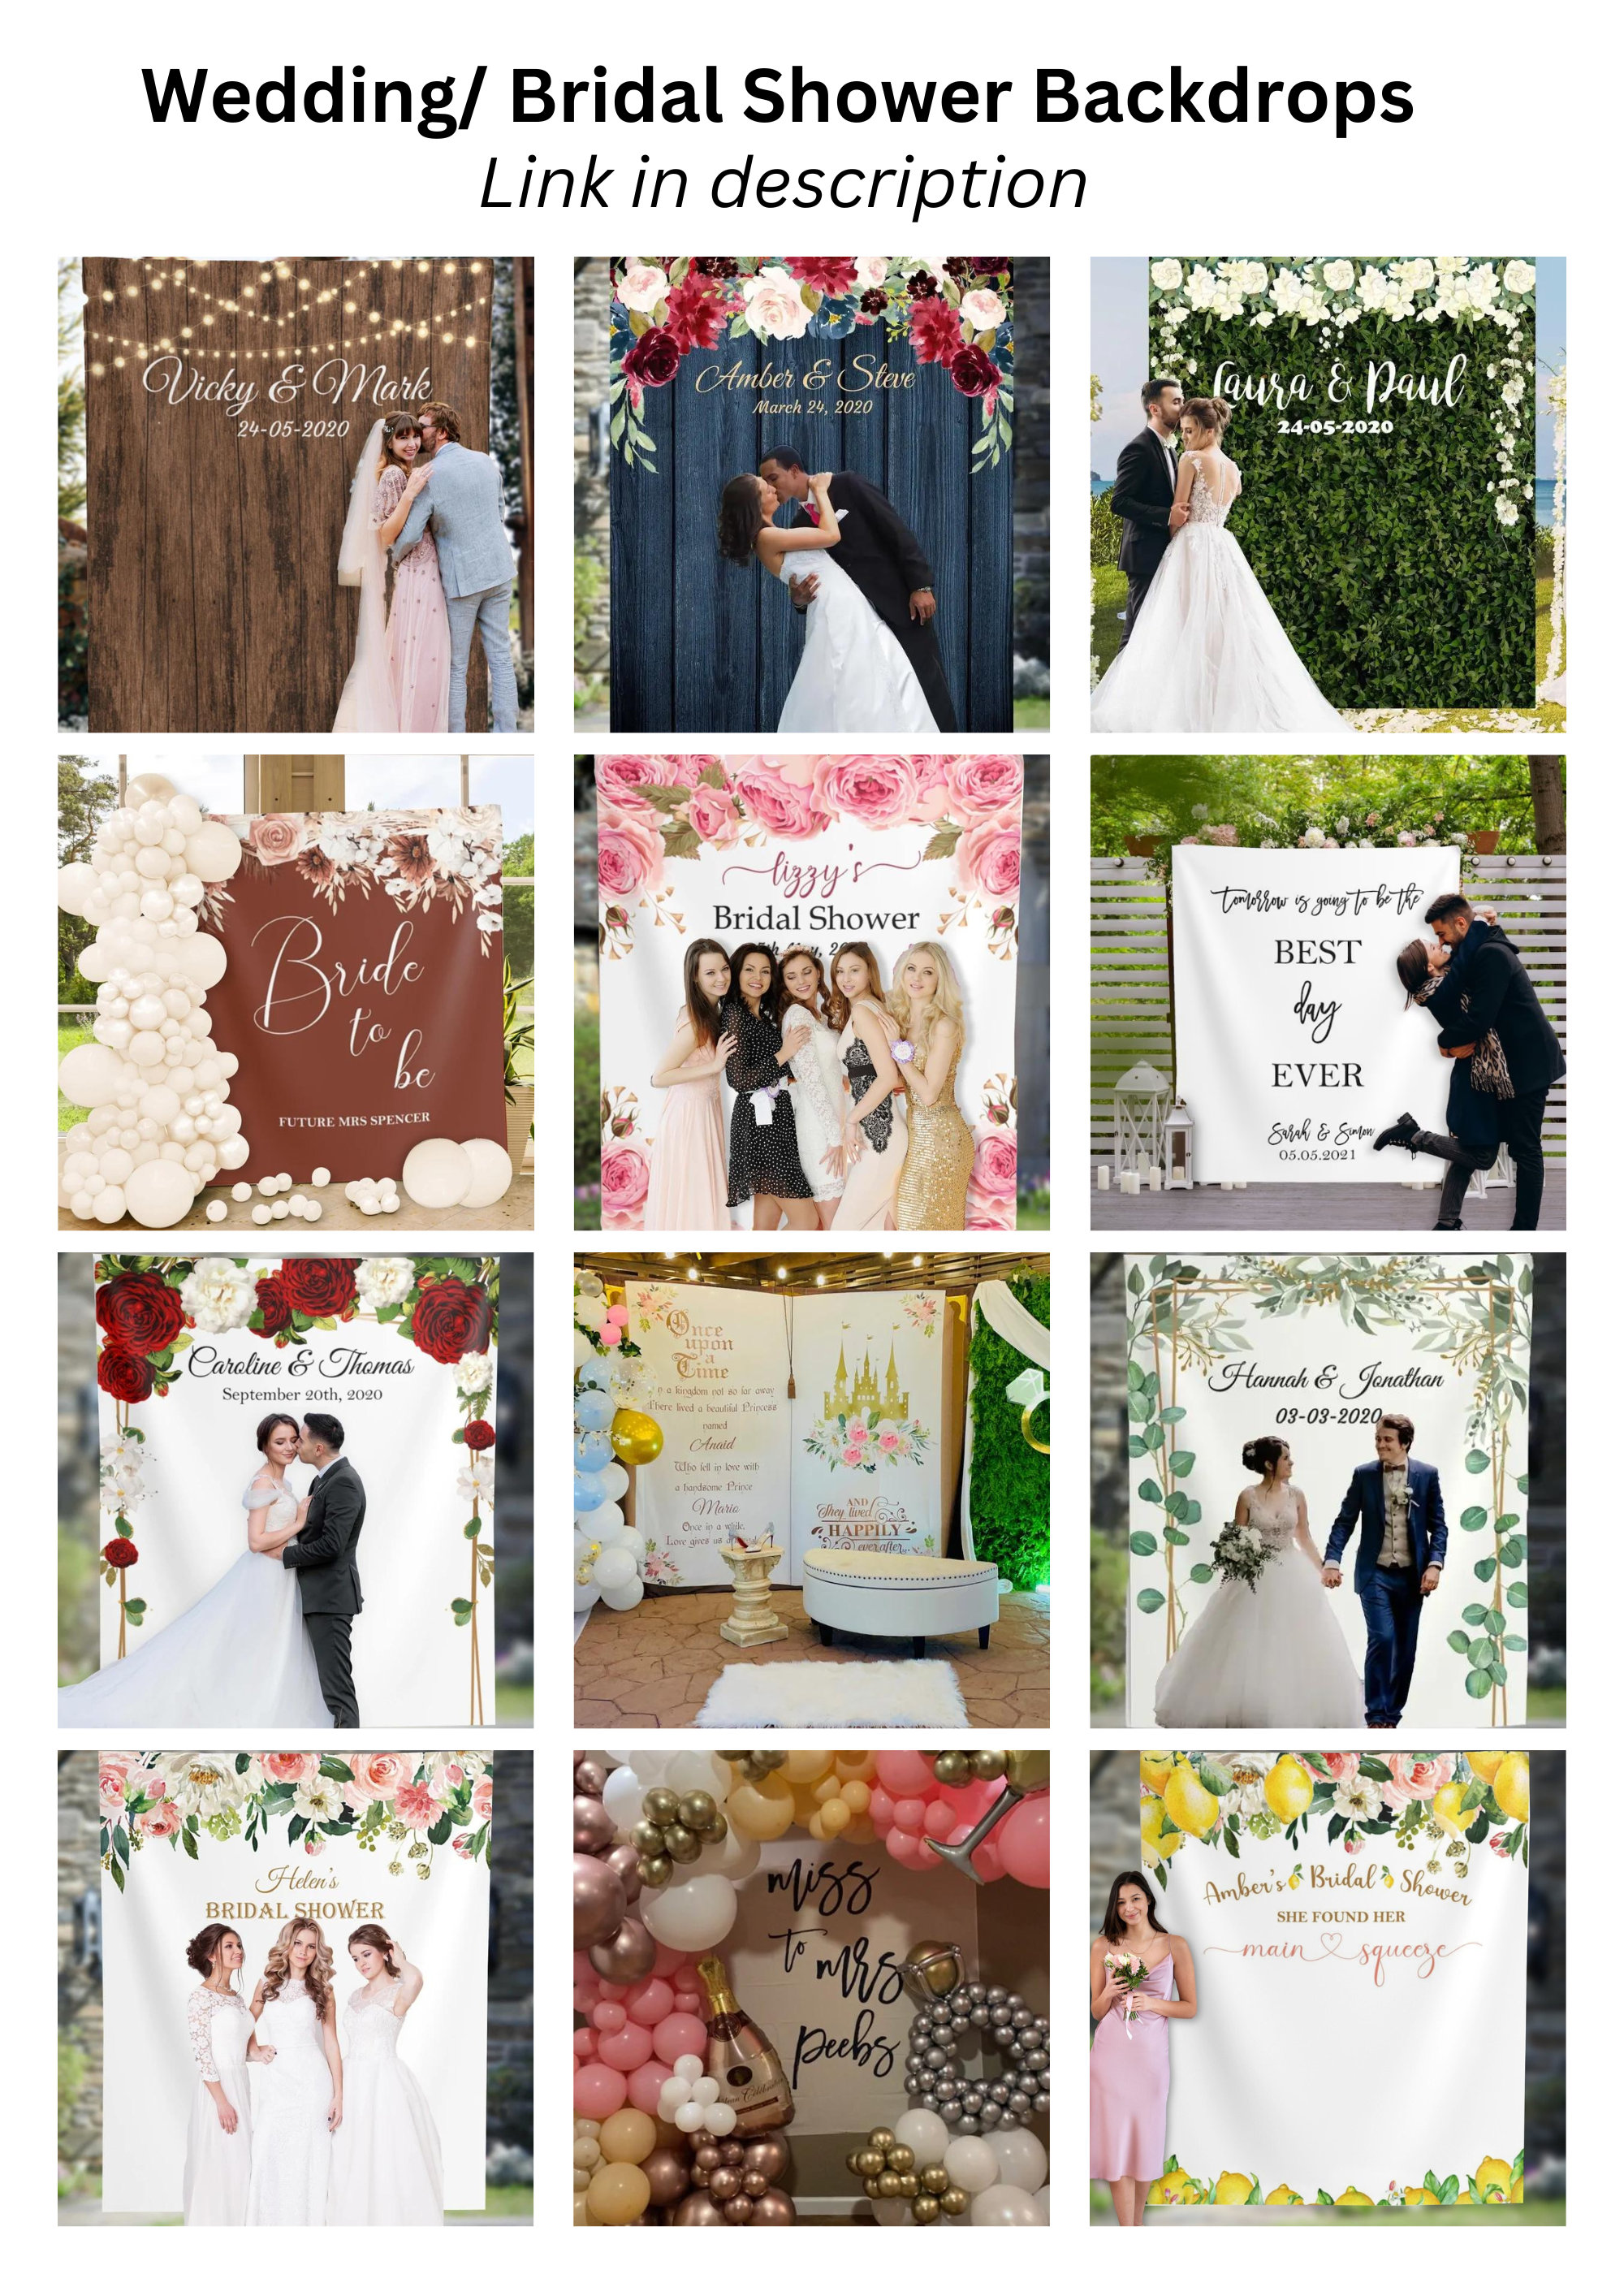 Buy My Best Friend's Wedding Planner - Microsoft Store